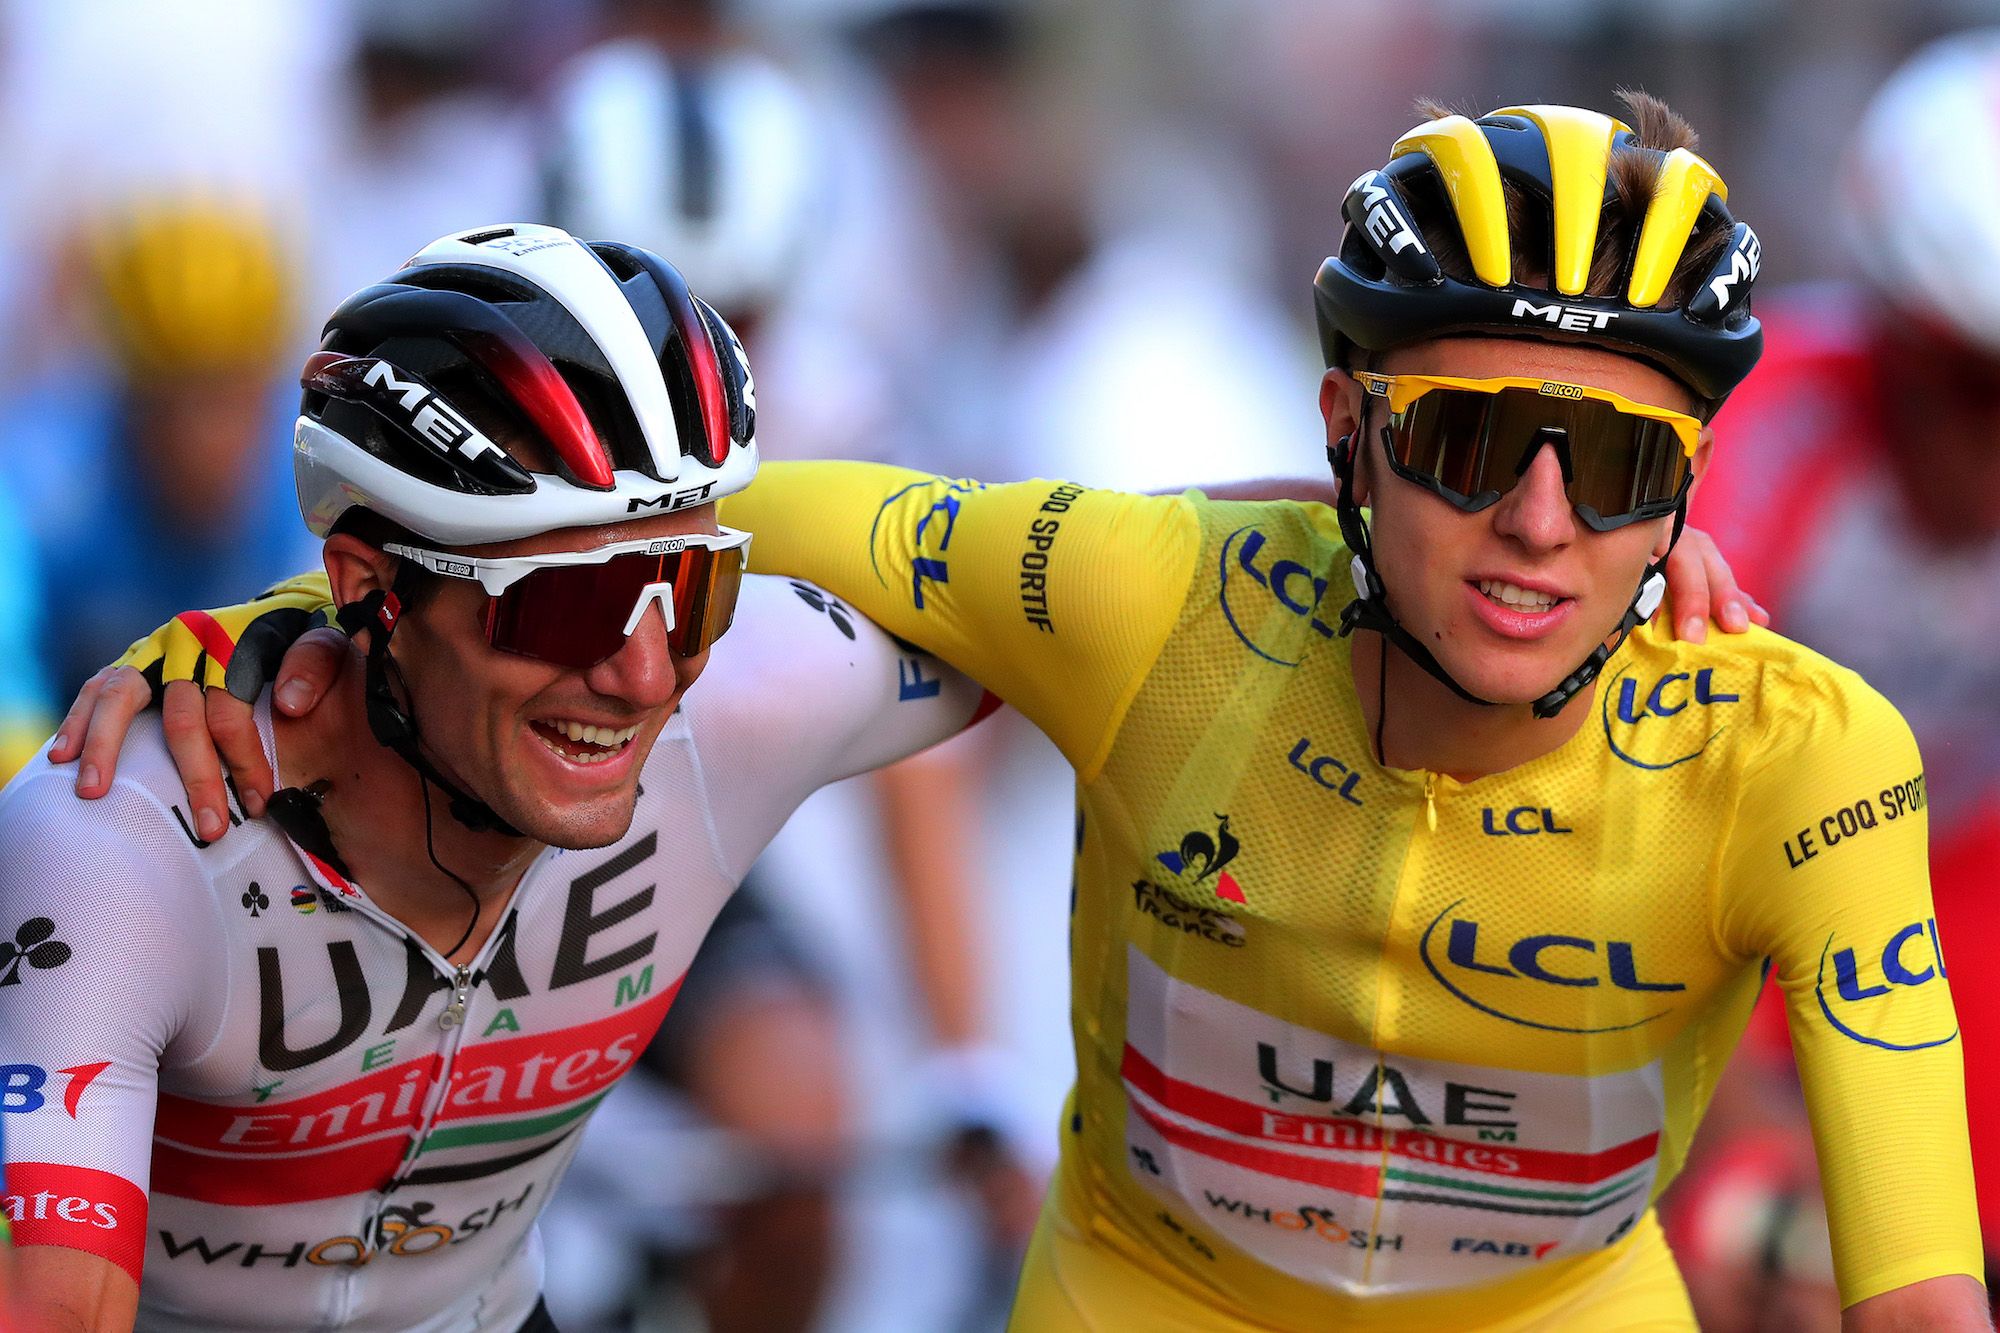 Tadej Pogačar will defend title at Tour de France 2021 before taking on Vuelta a España